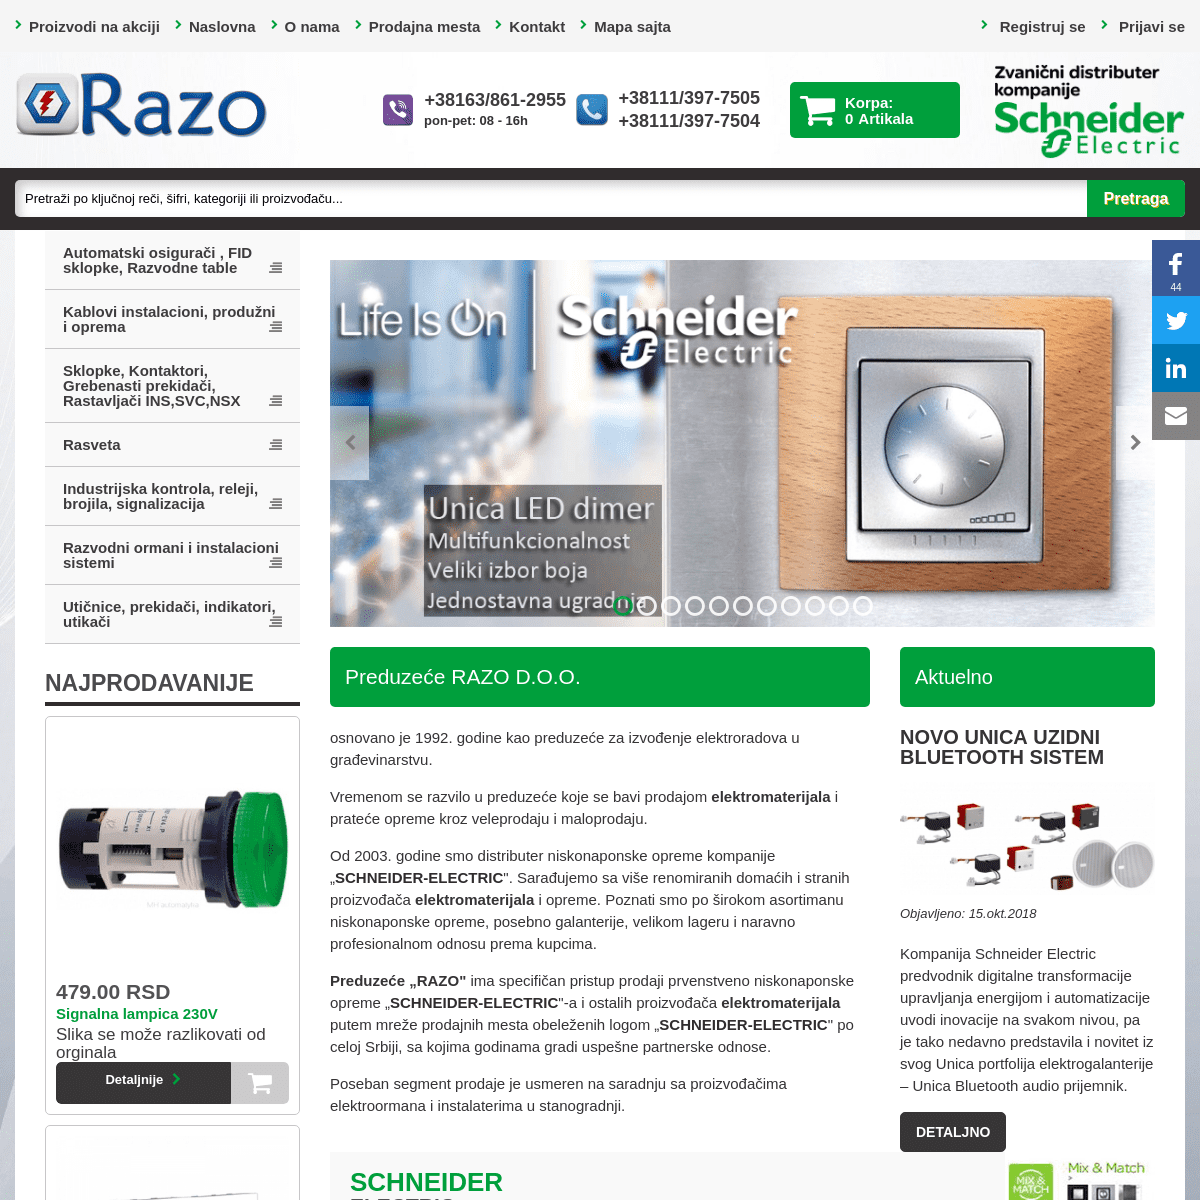 A complete backup of razoelektro.com